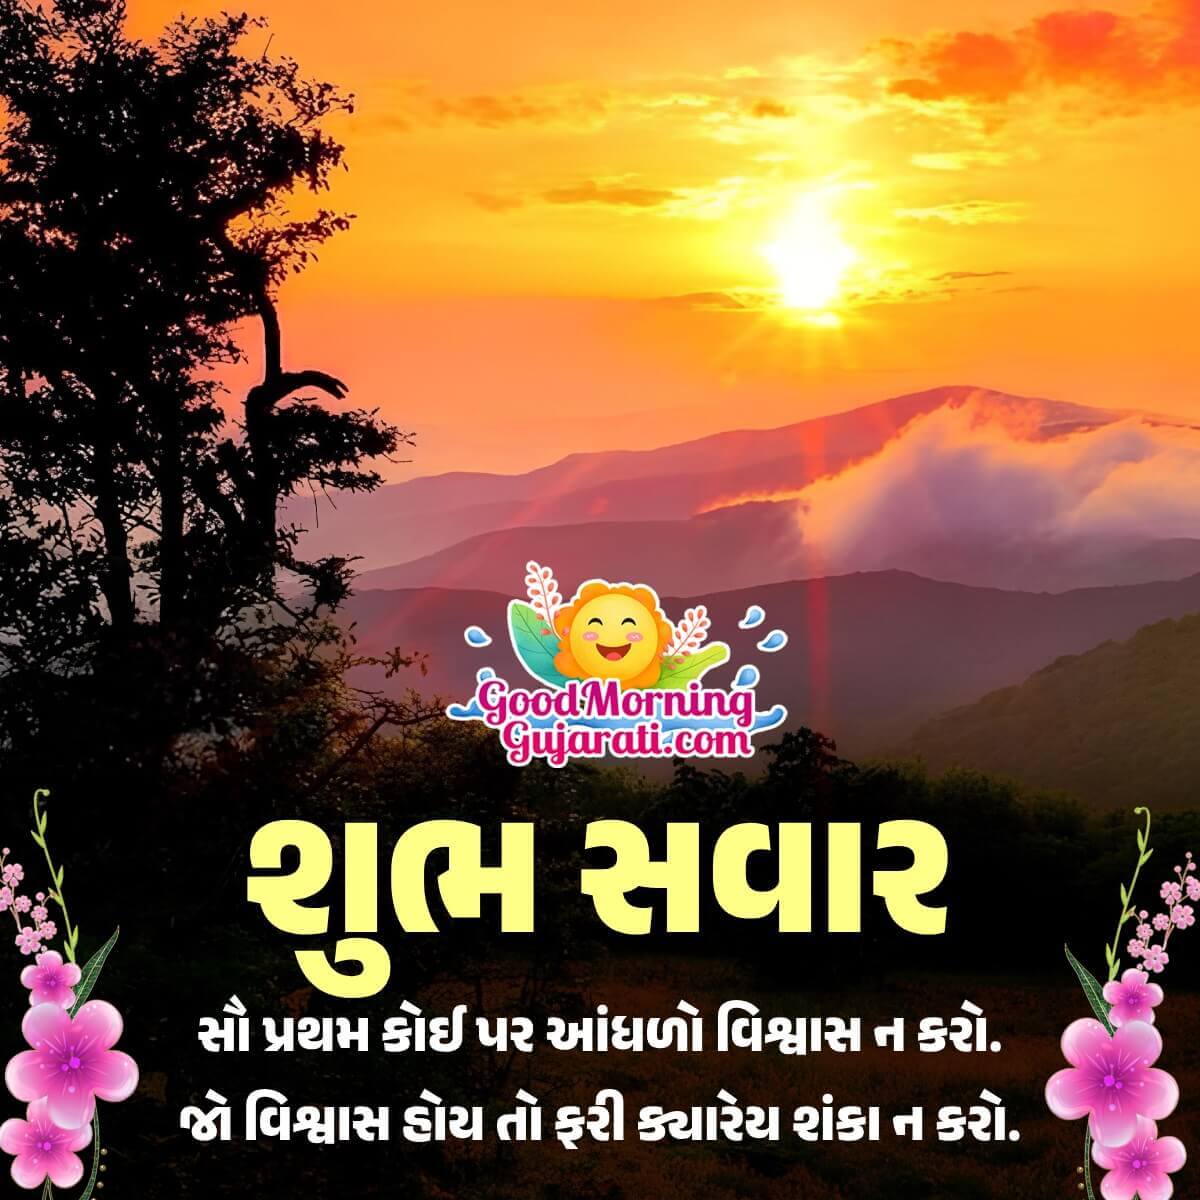 Beautiful Shubh Savar Gujarati Thoughts Image